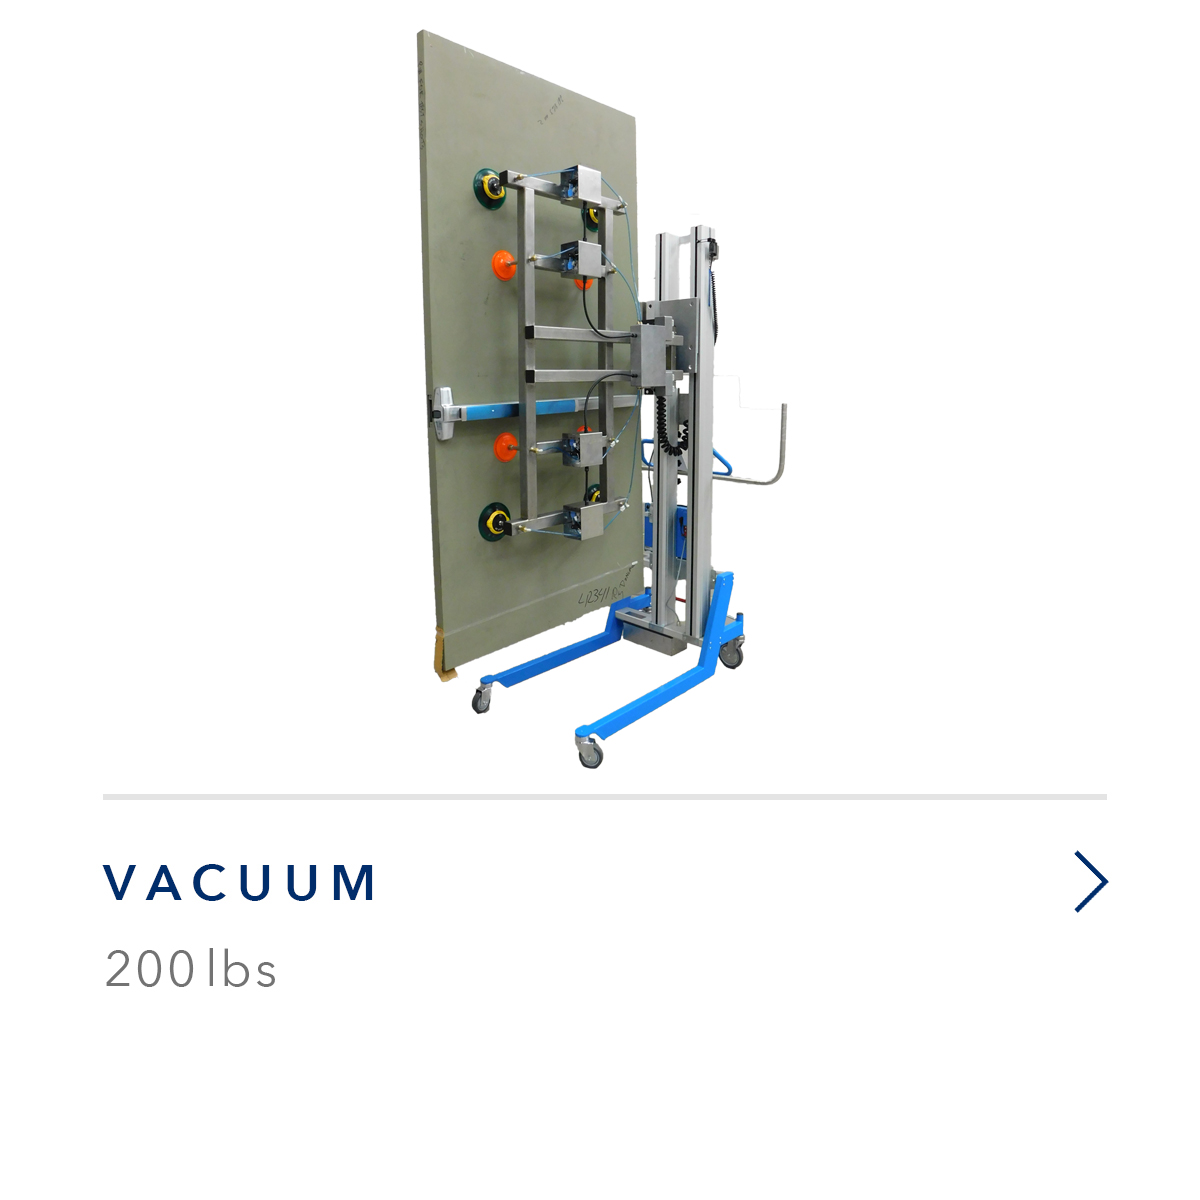 06-lof-vacuum01